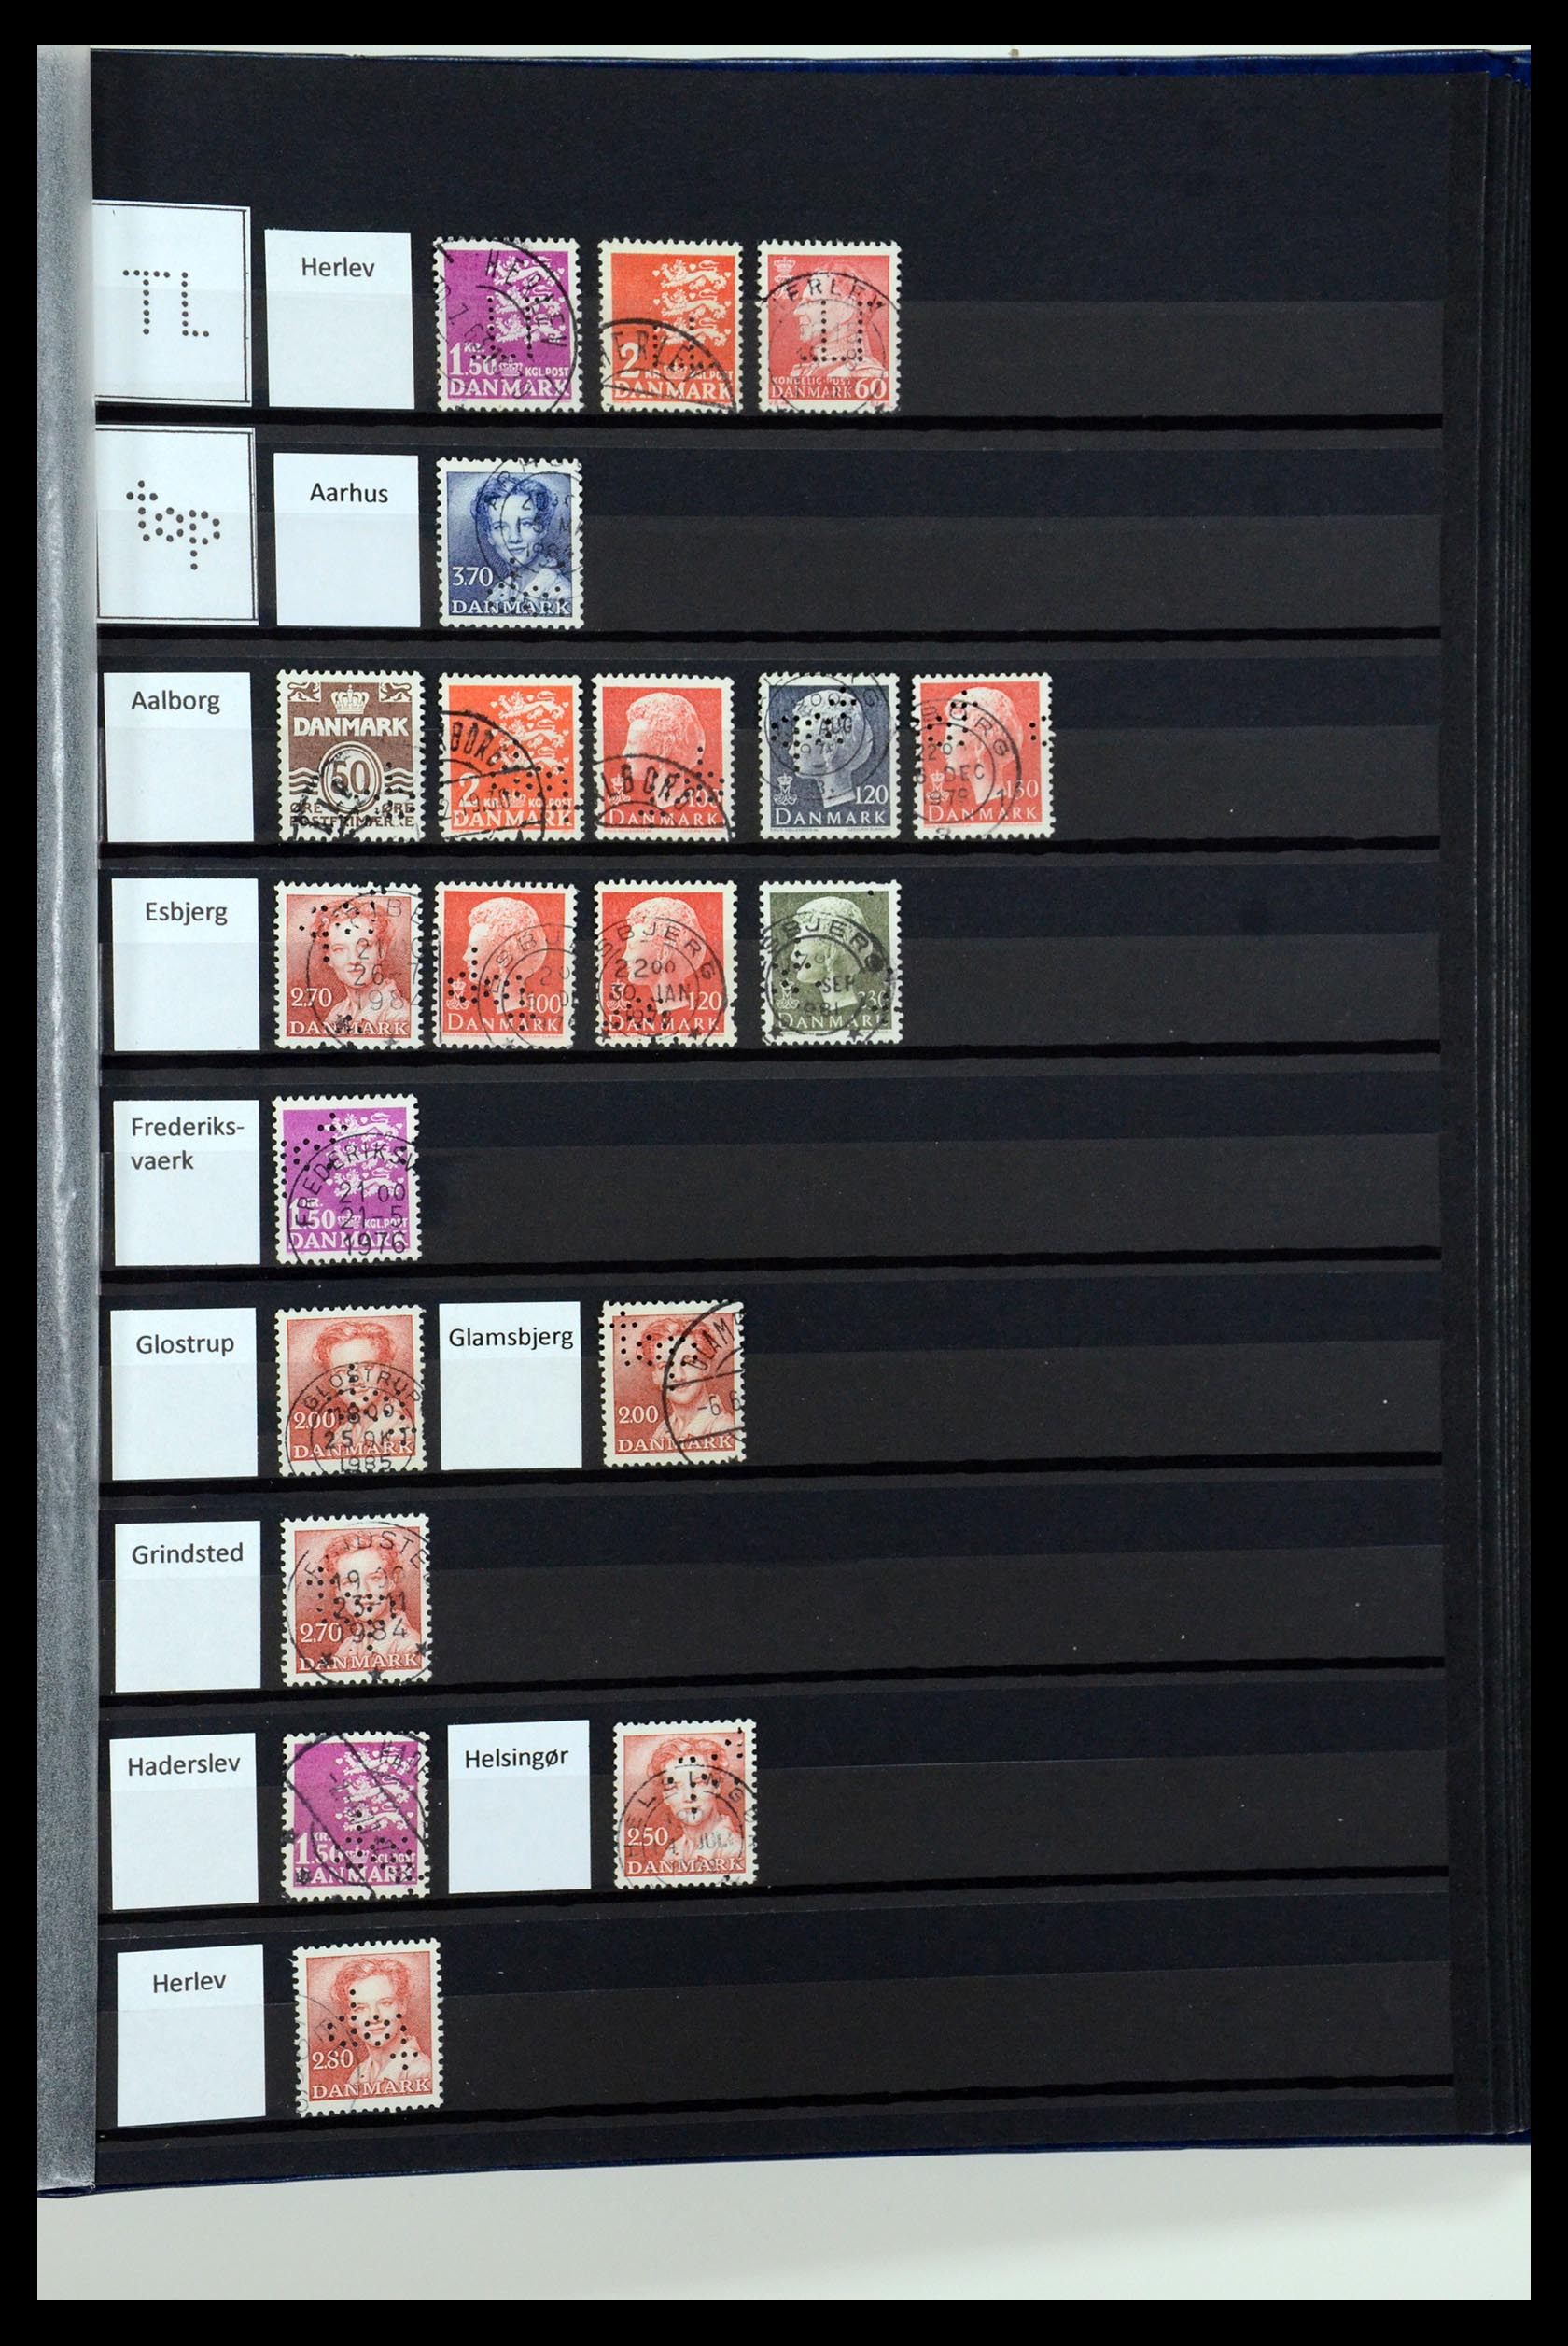 36396 106 - Stamp collection 36396 Denmark perfins.